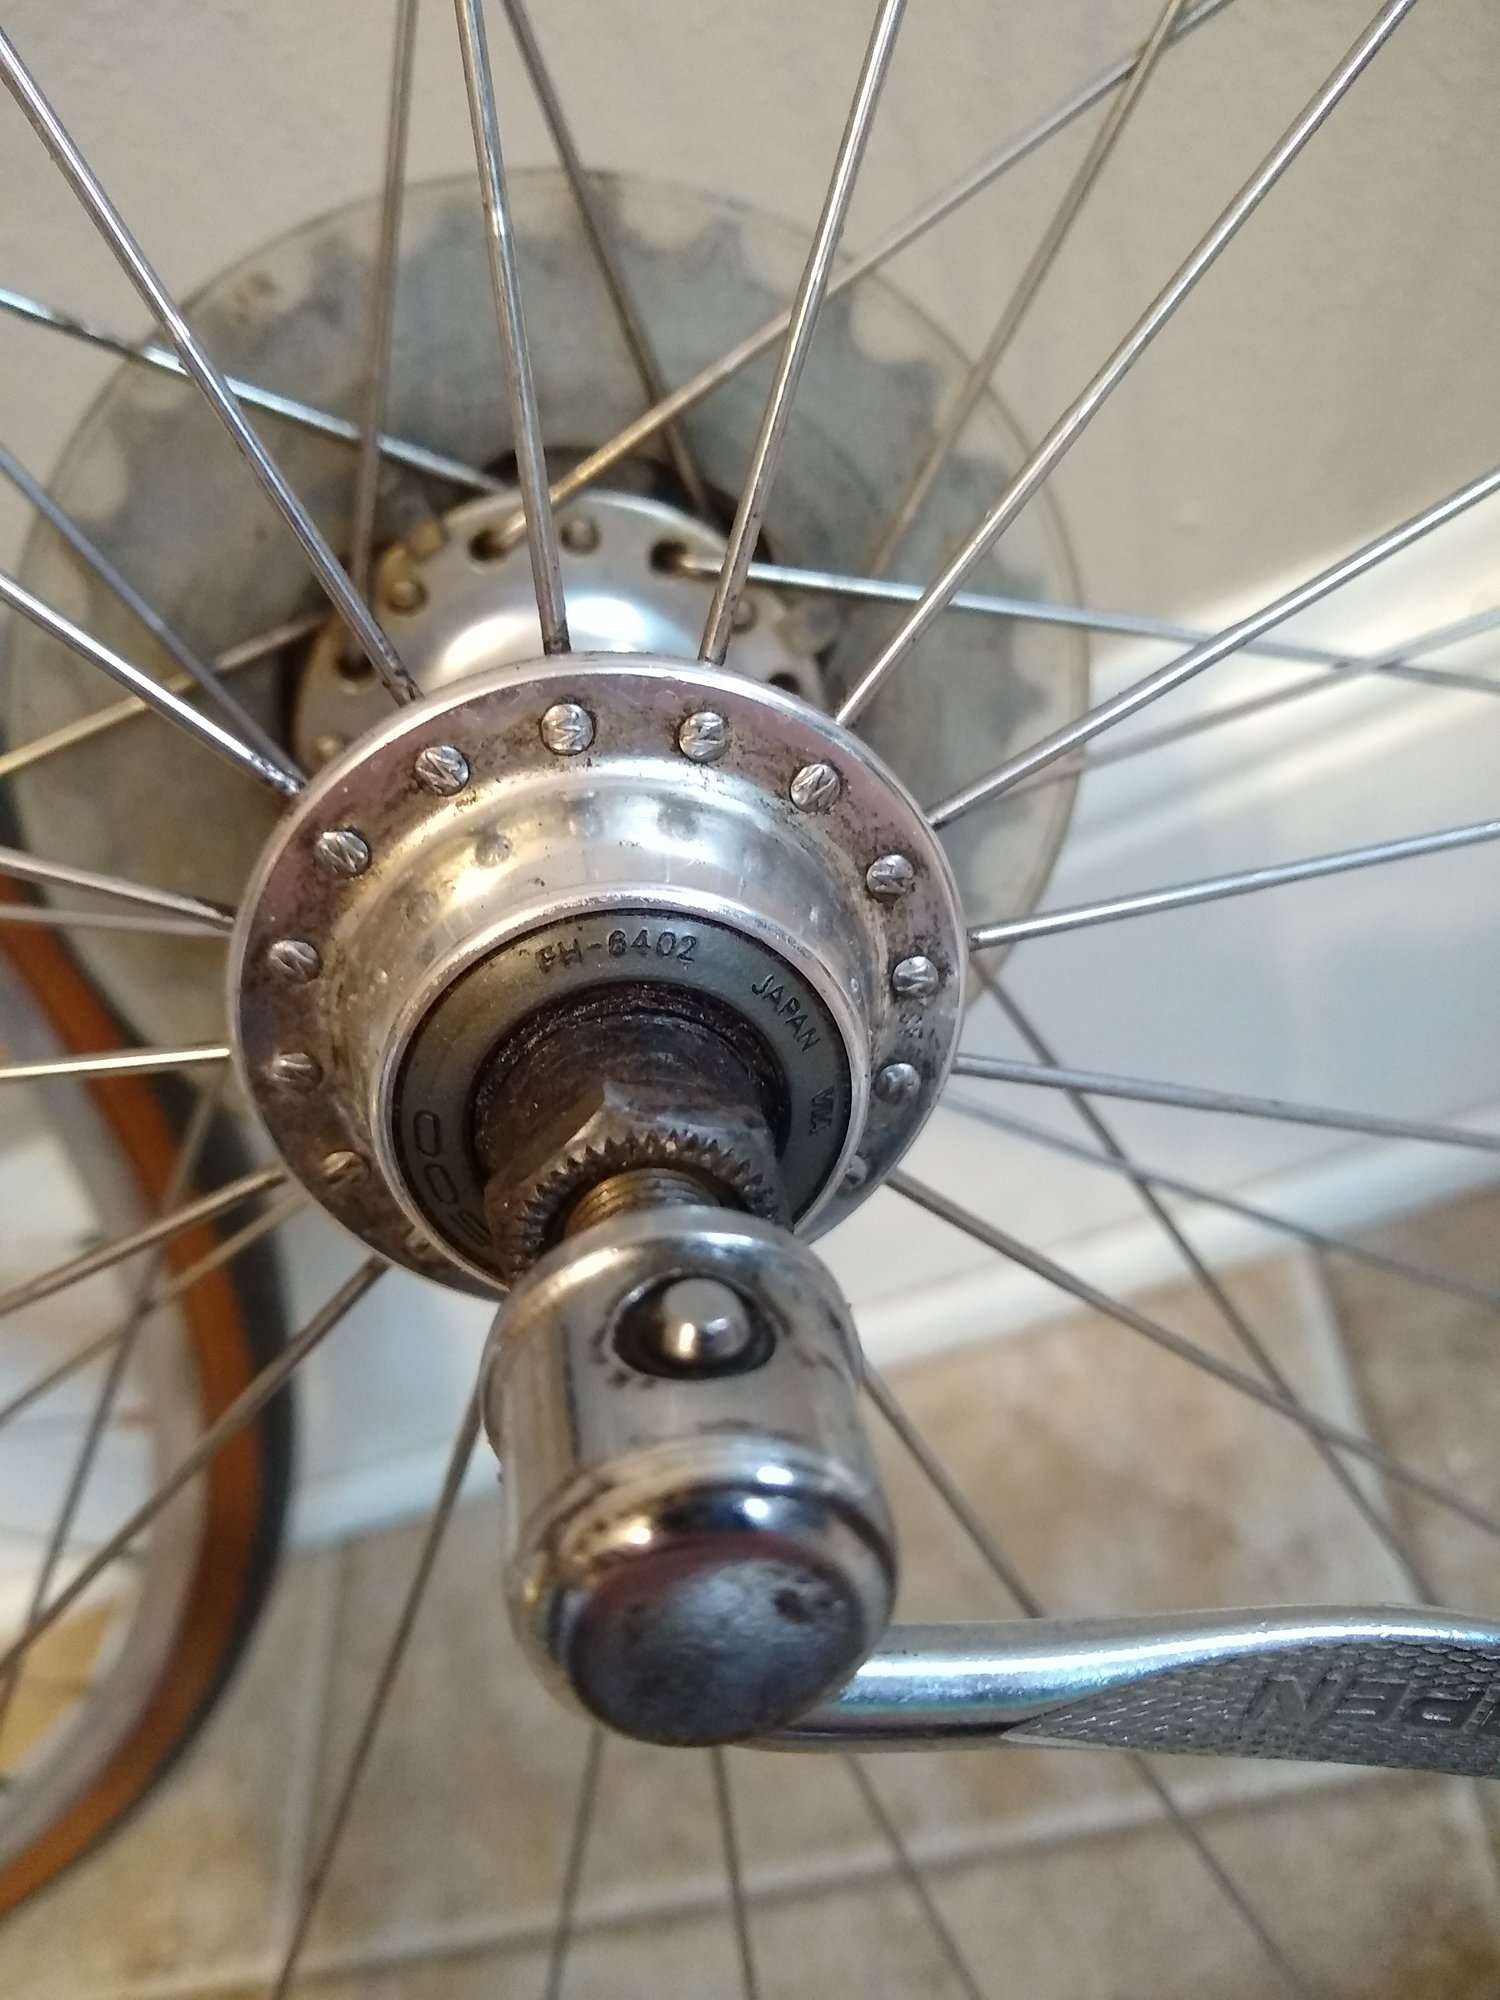 Araya ctl-385 Shimano 600 tricolor wheelset - Bike Forums